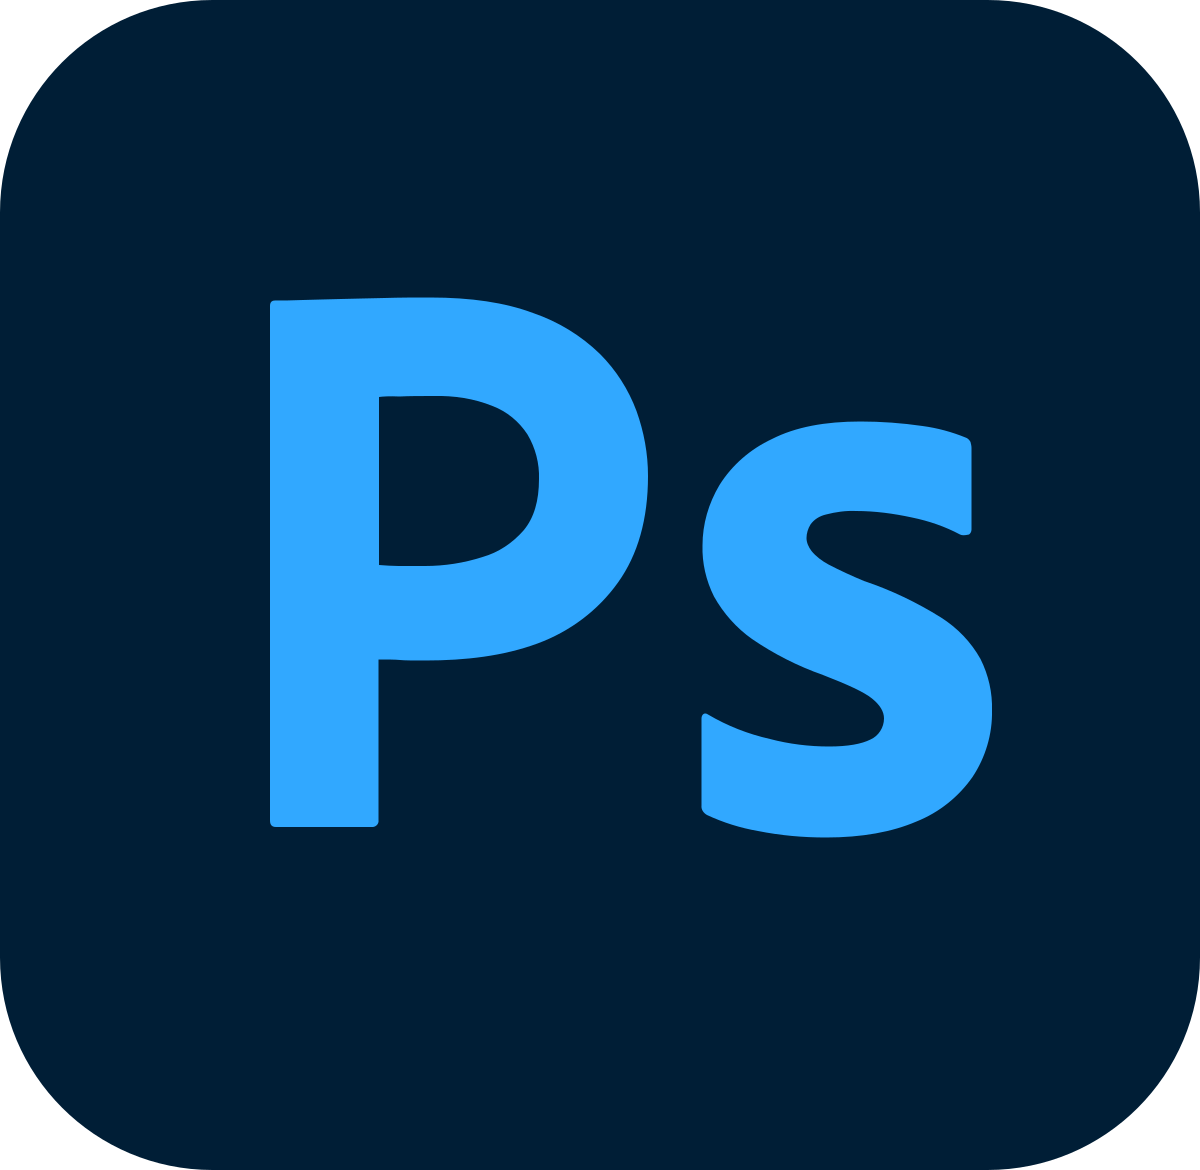 Adobe photoshop cs6 mac download